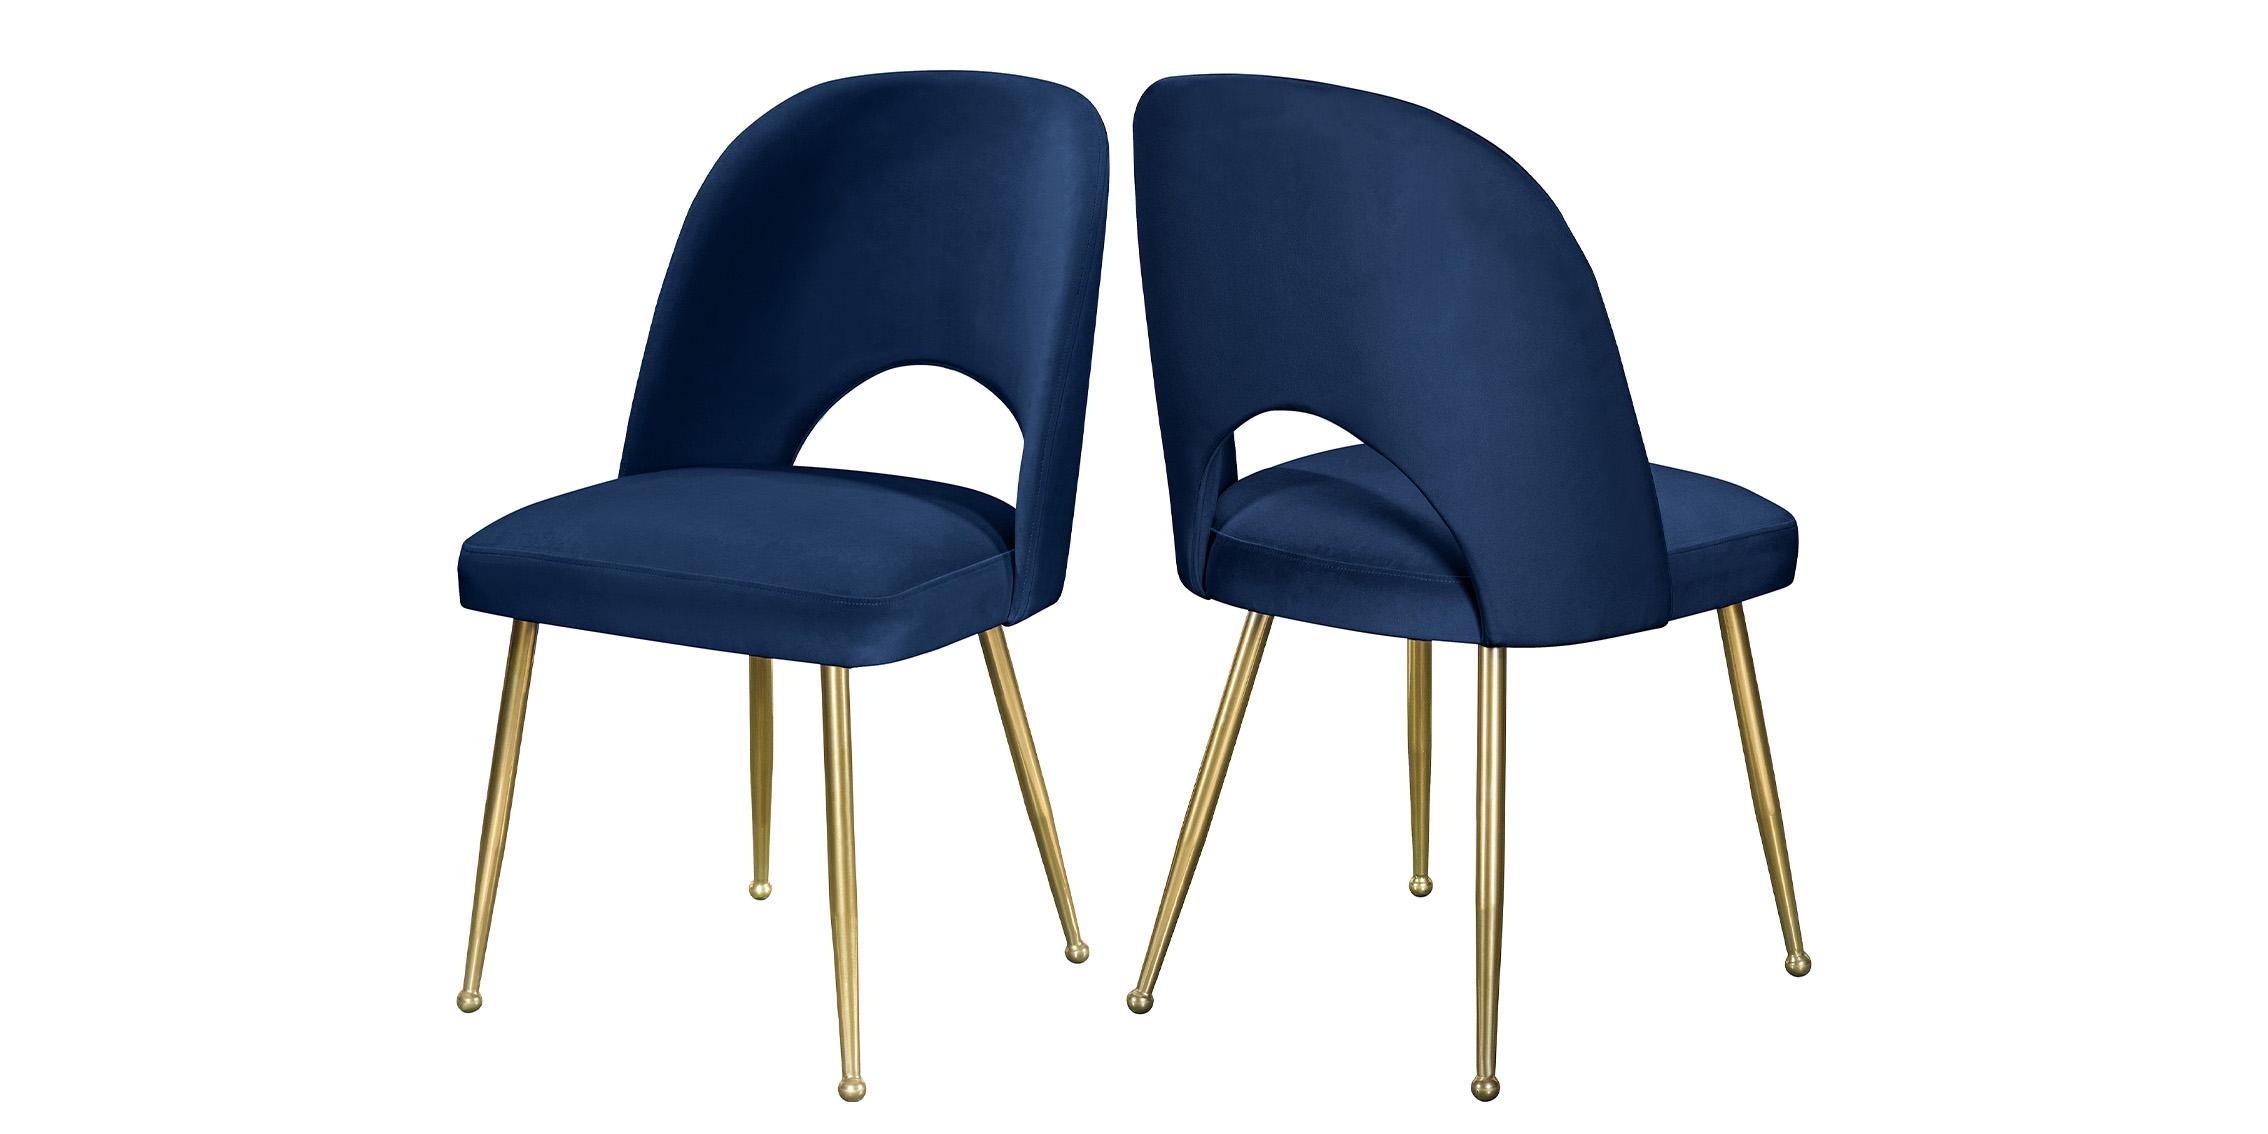 Contemporary, Modern Dining Chair Set LOGAN 990Navy-C 990Navy-C in Navy, Gold Fabric